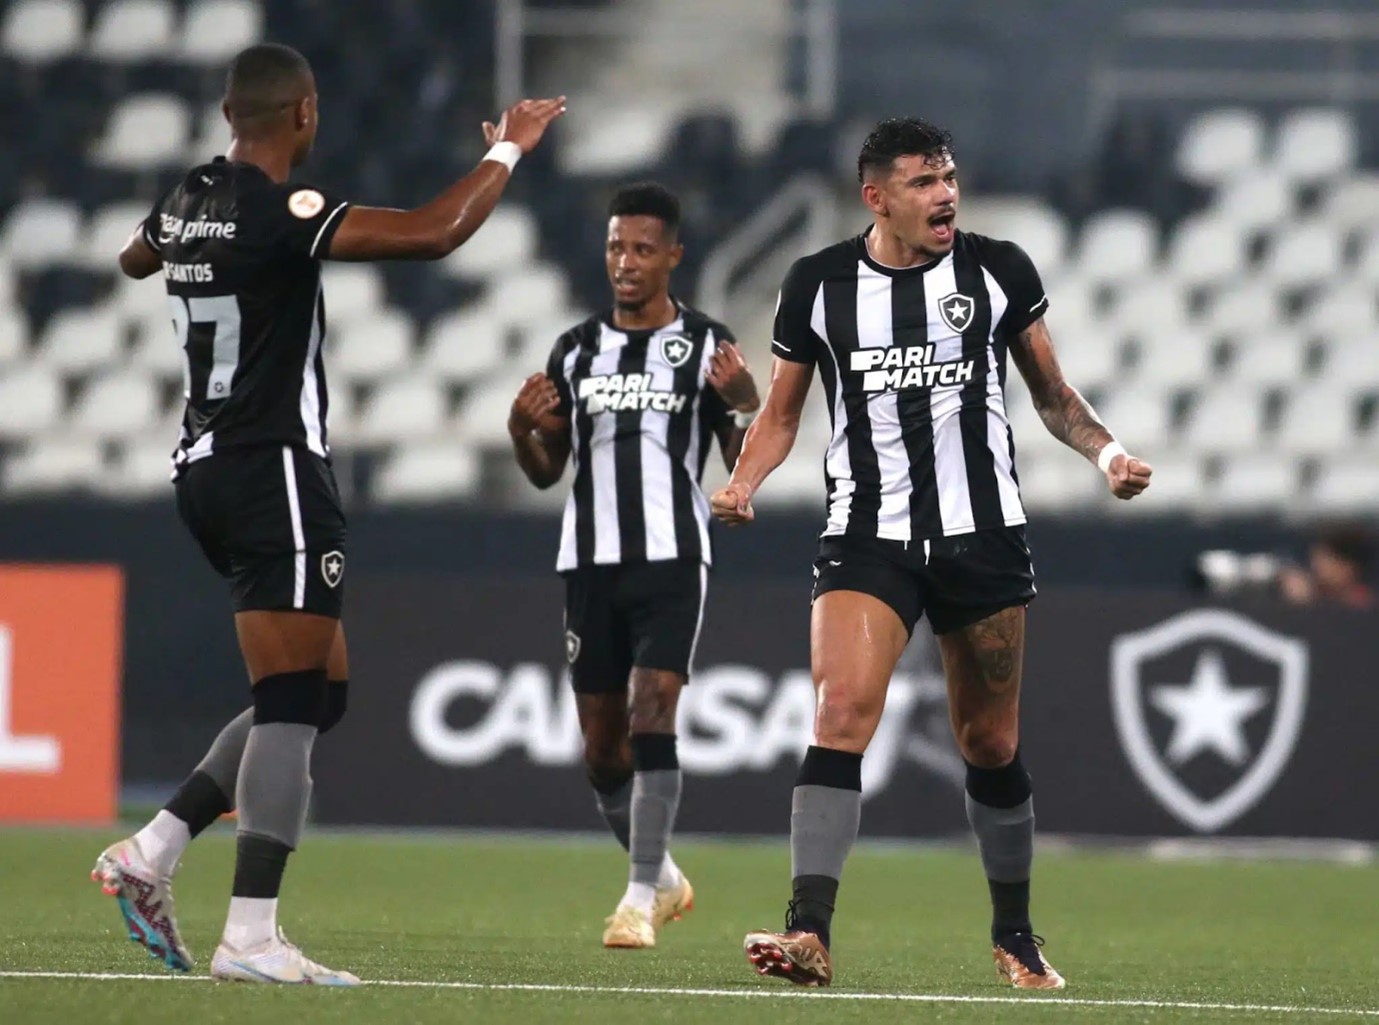 Fortaleza vs Botafogo